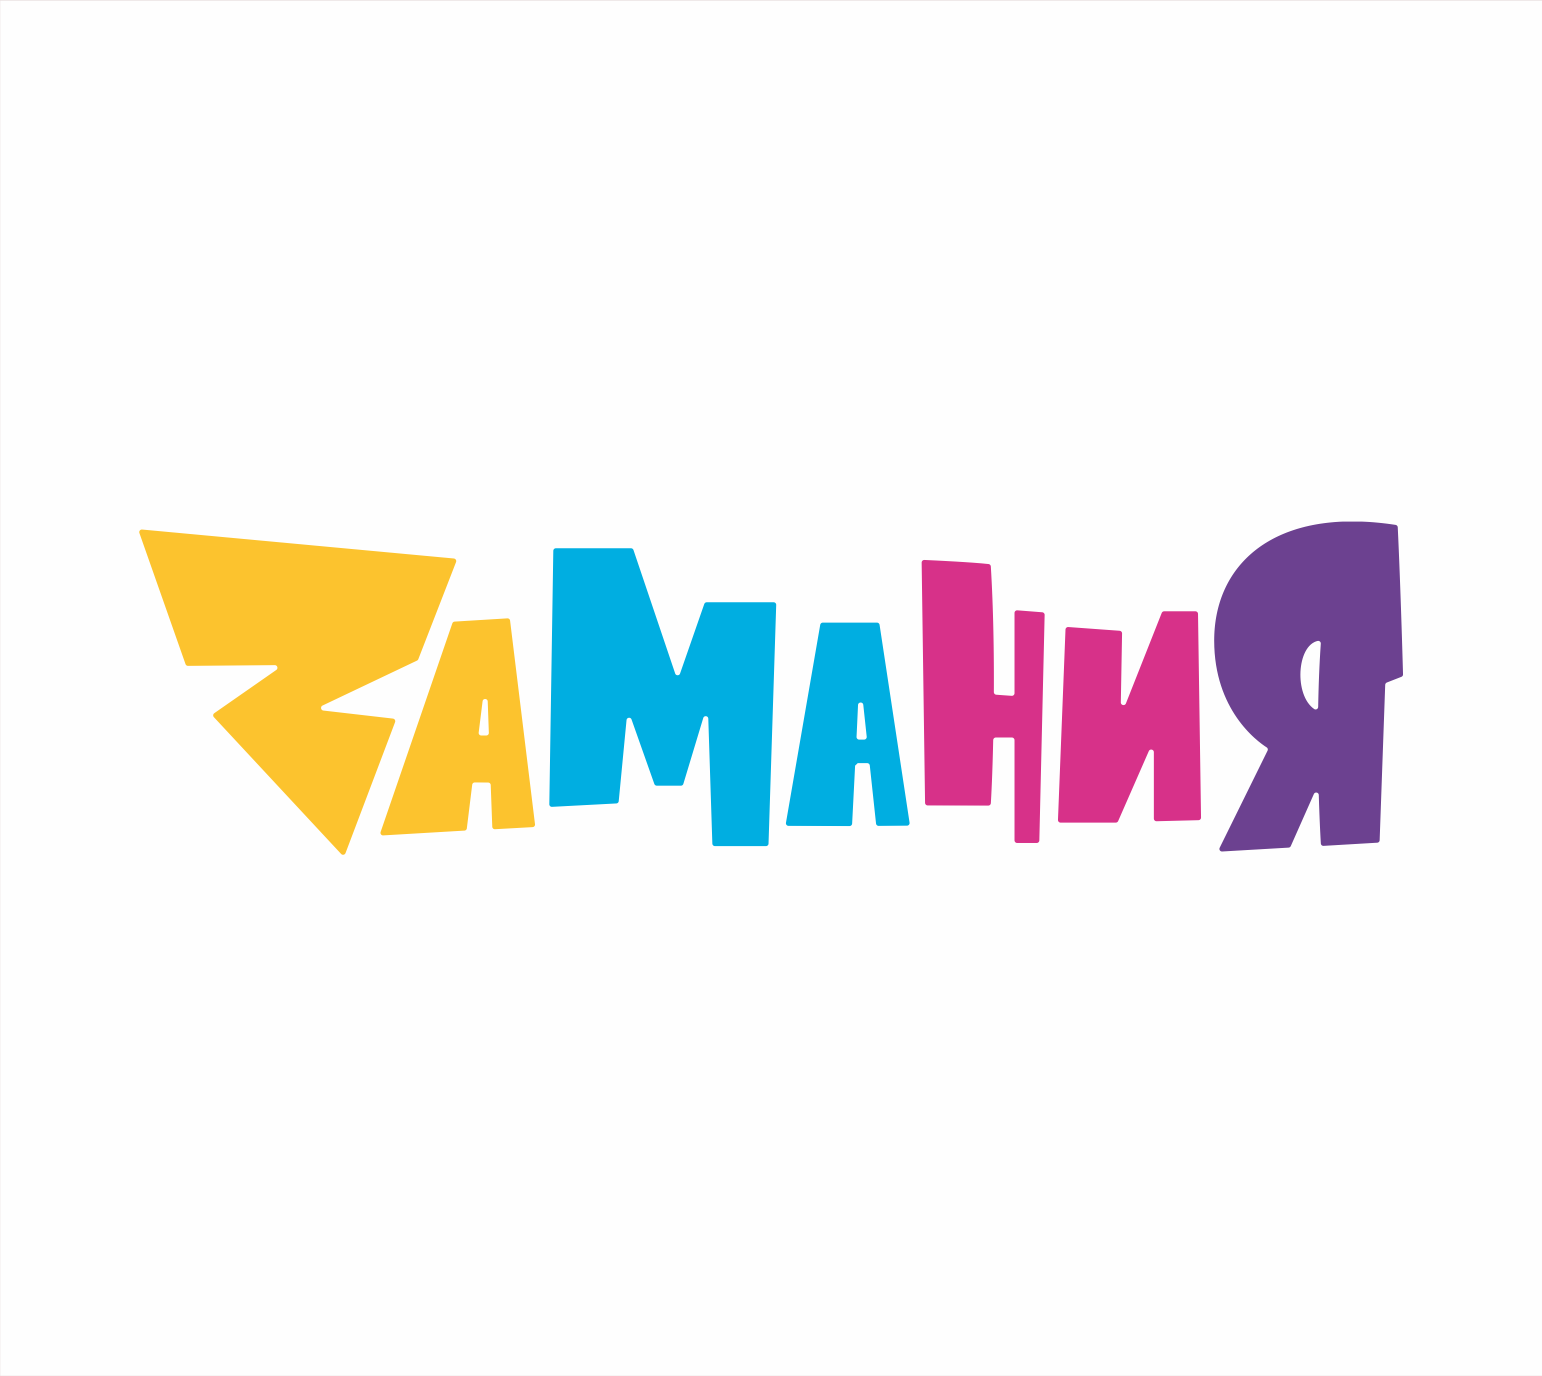 Zamania logo